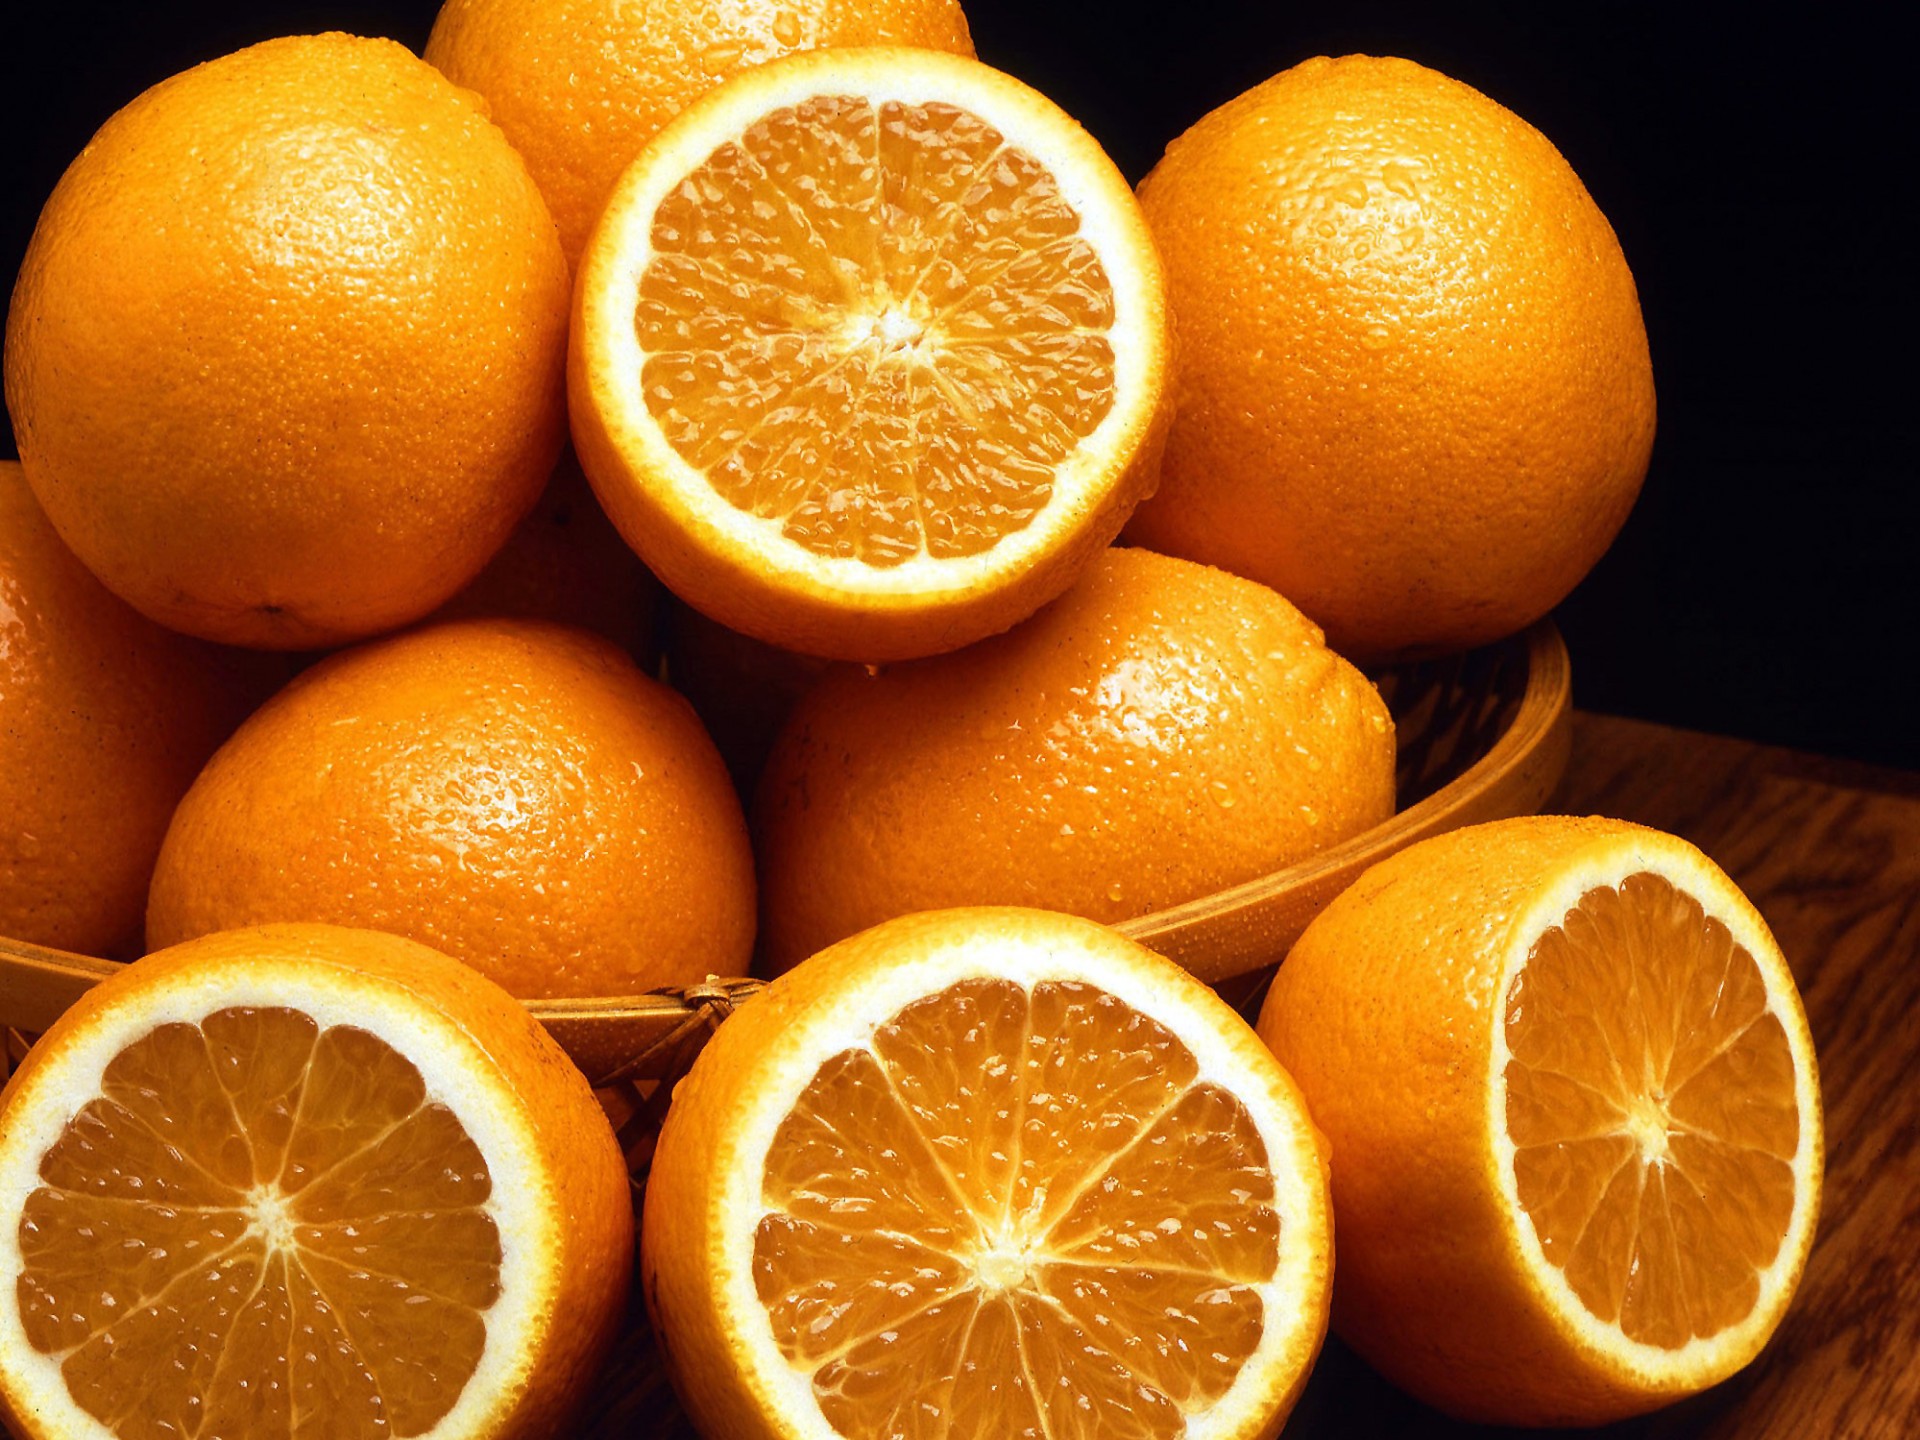 fruits, oranges - desktop wallpaper